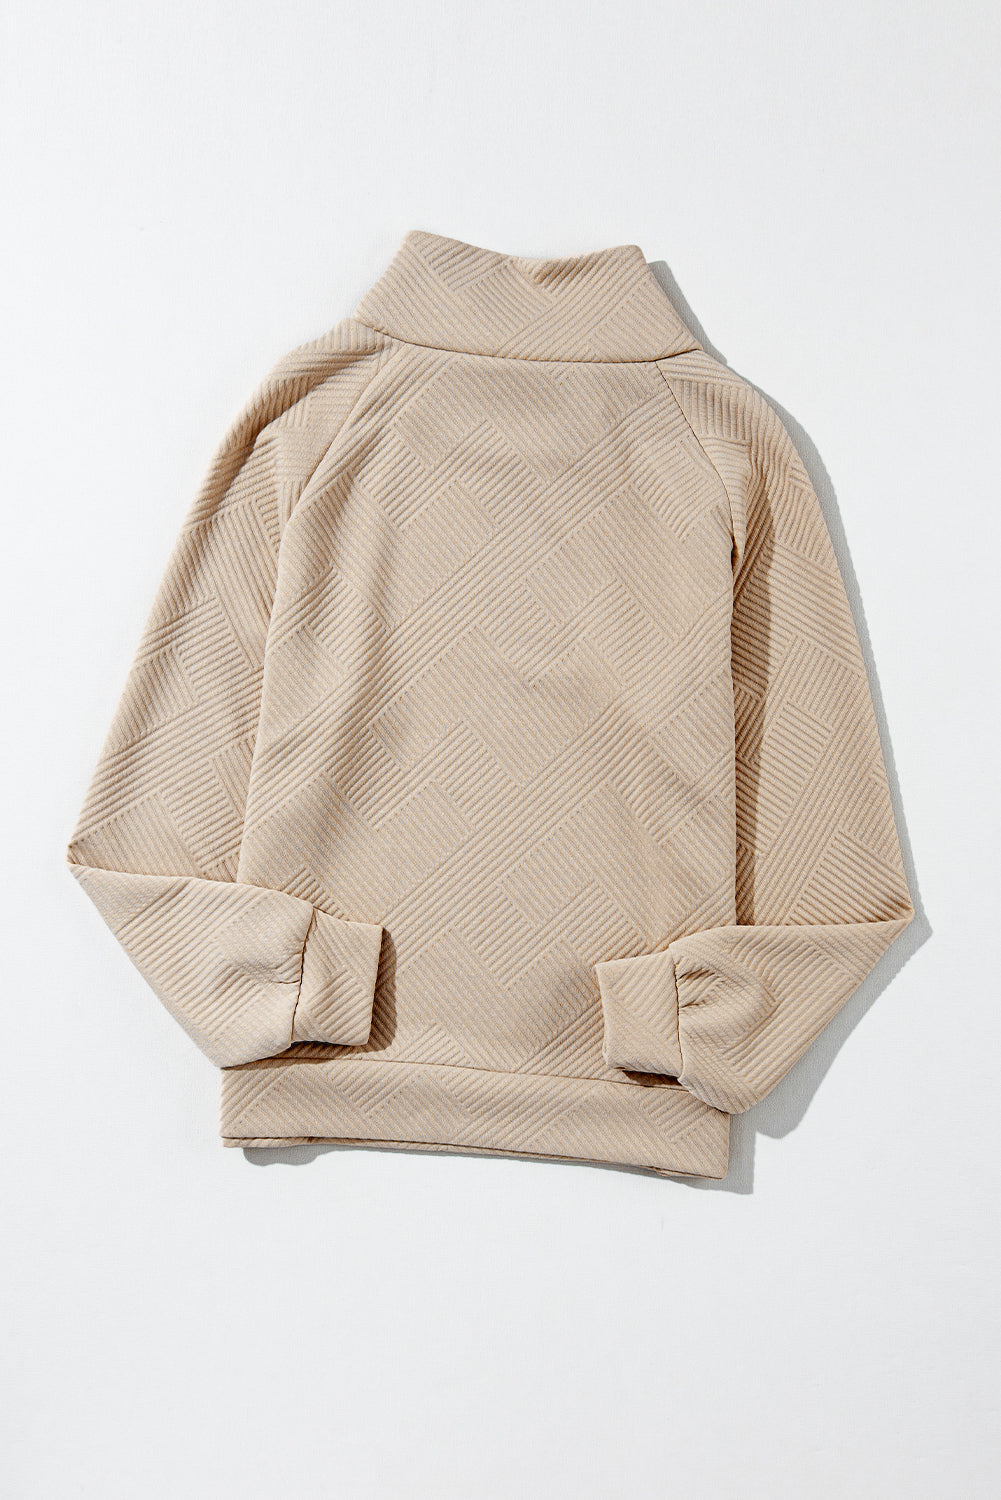 Apricot  Asymmetric Buttons Detail High Neck Textured Sweatshirt